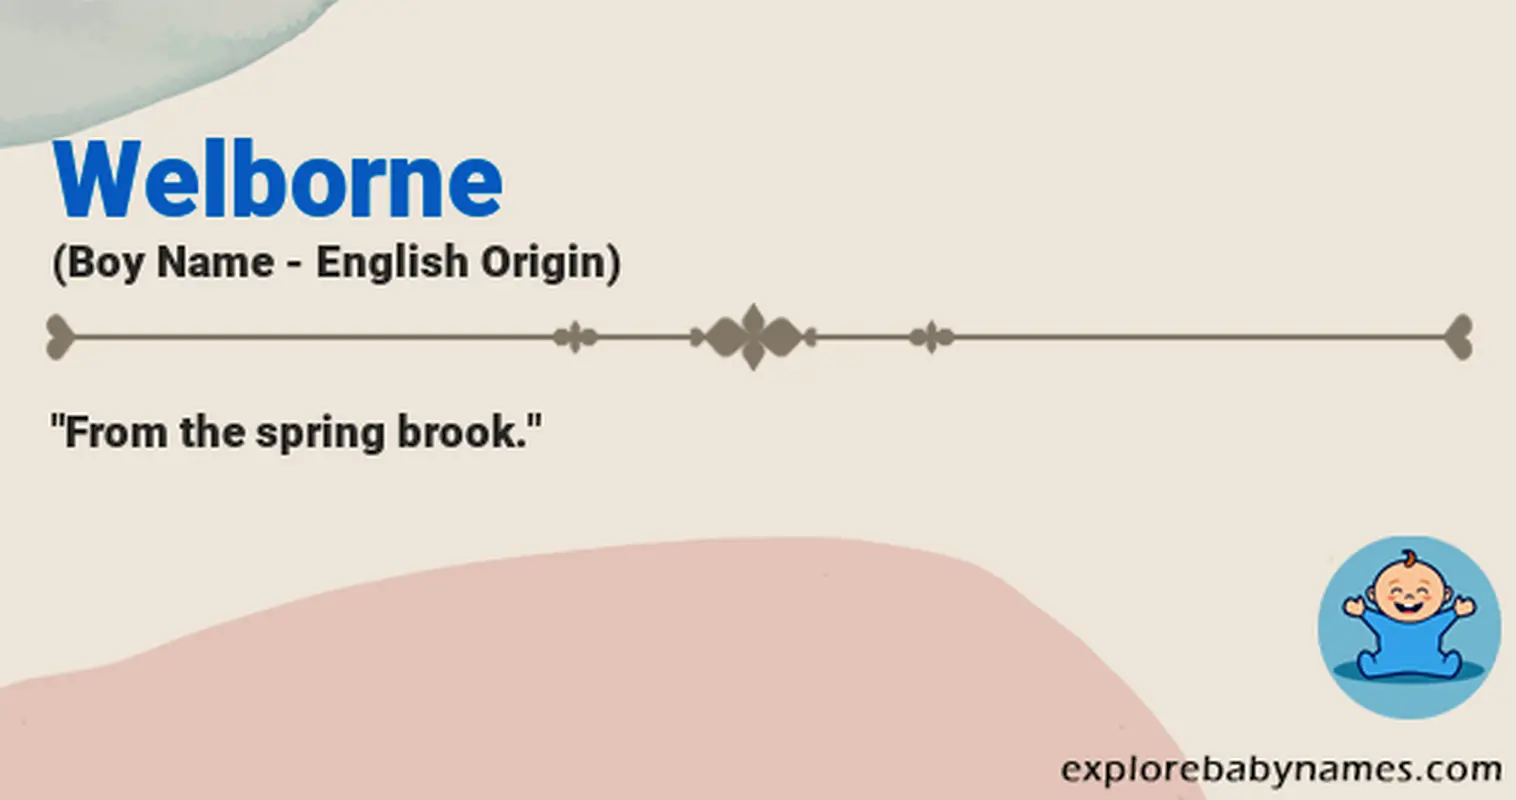 Meaning of Welborne